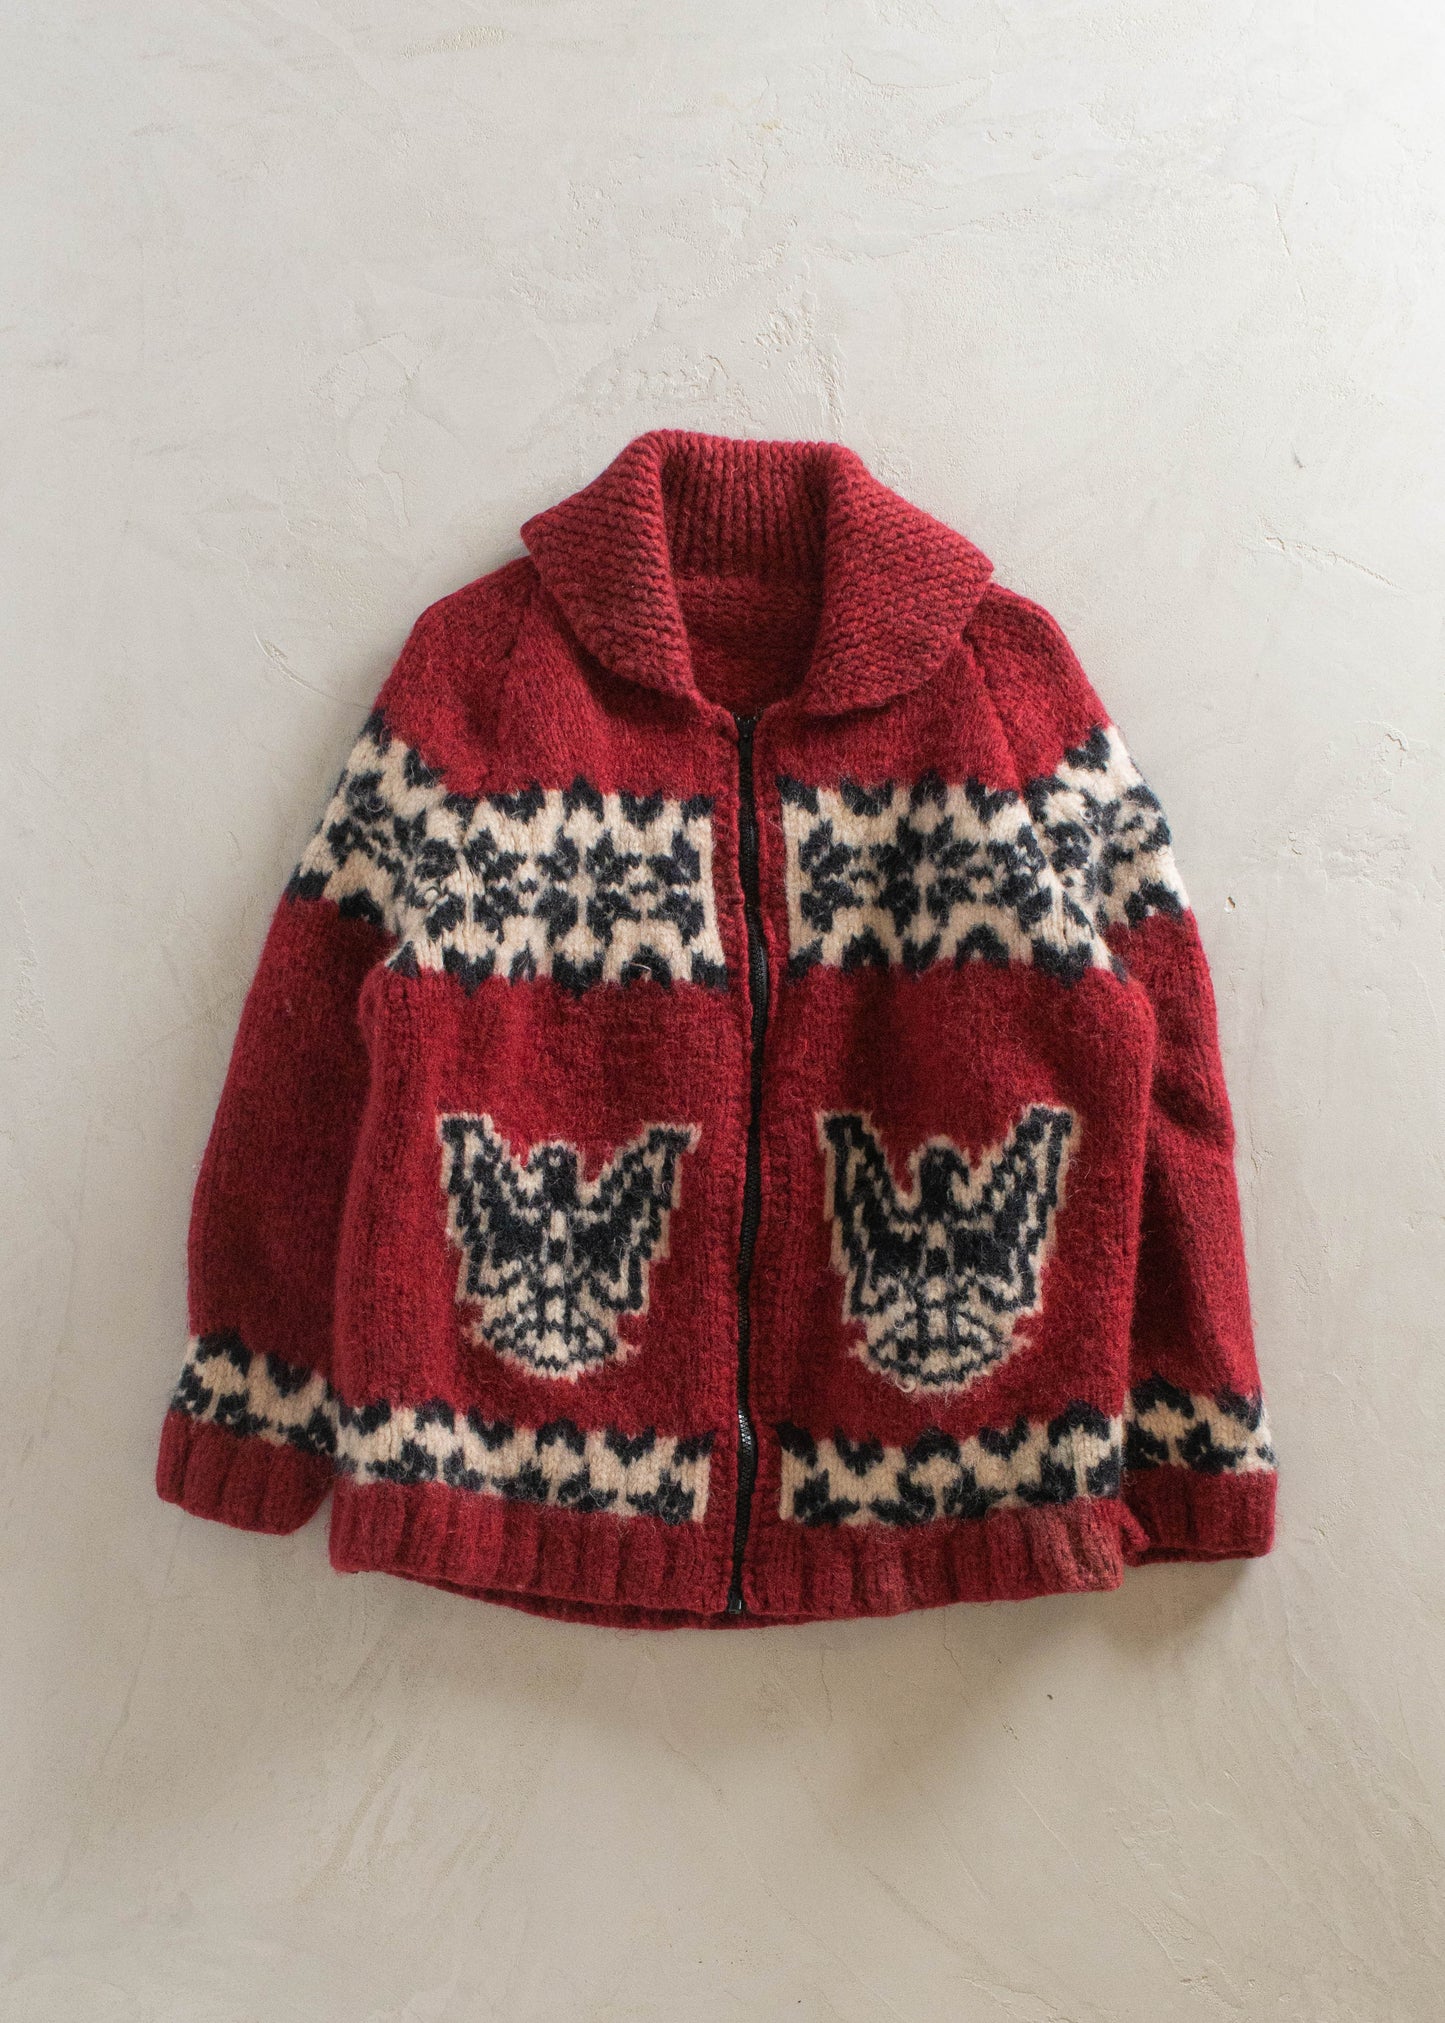 1980s Thunder Bird Cowichan Style Wool Cardigan Size S/M